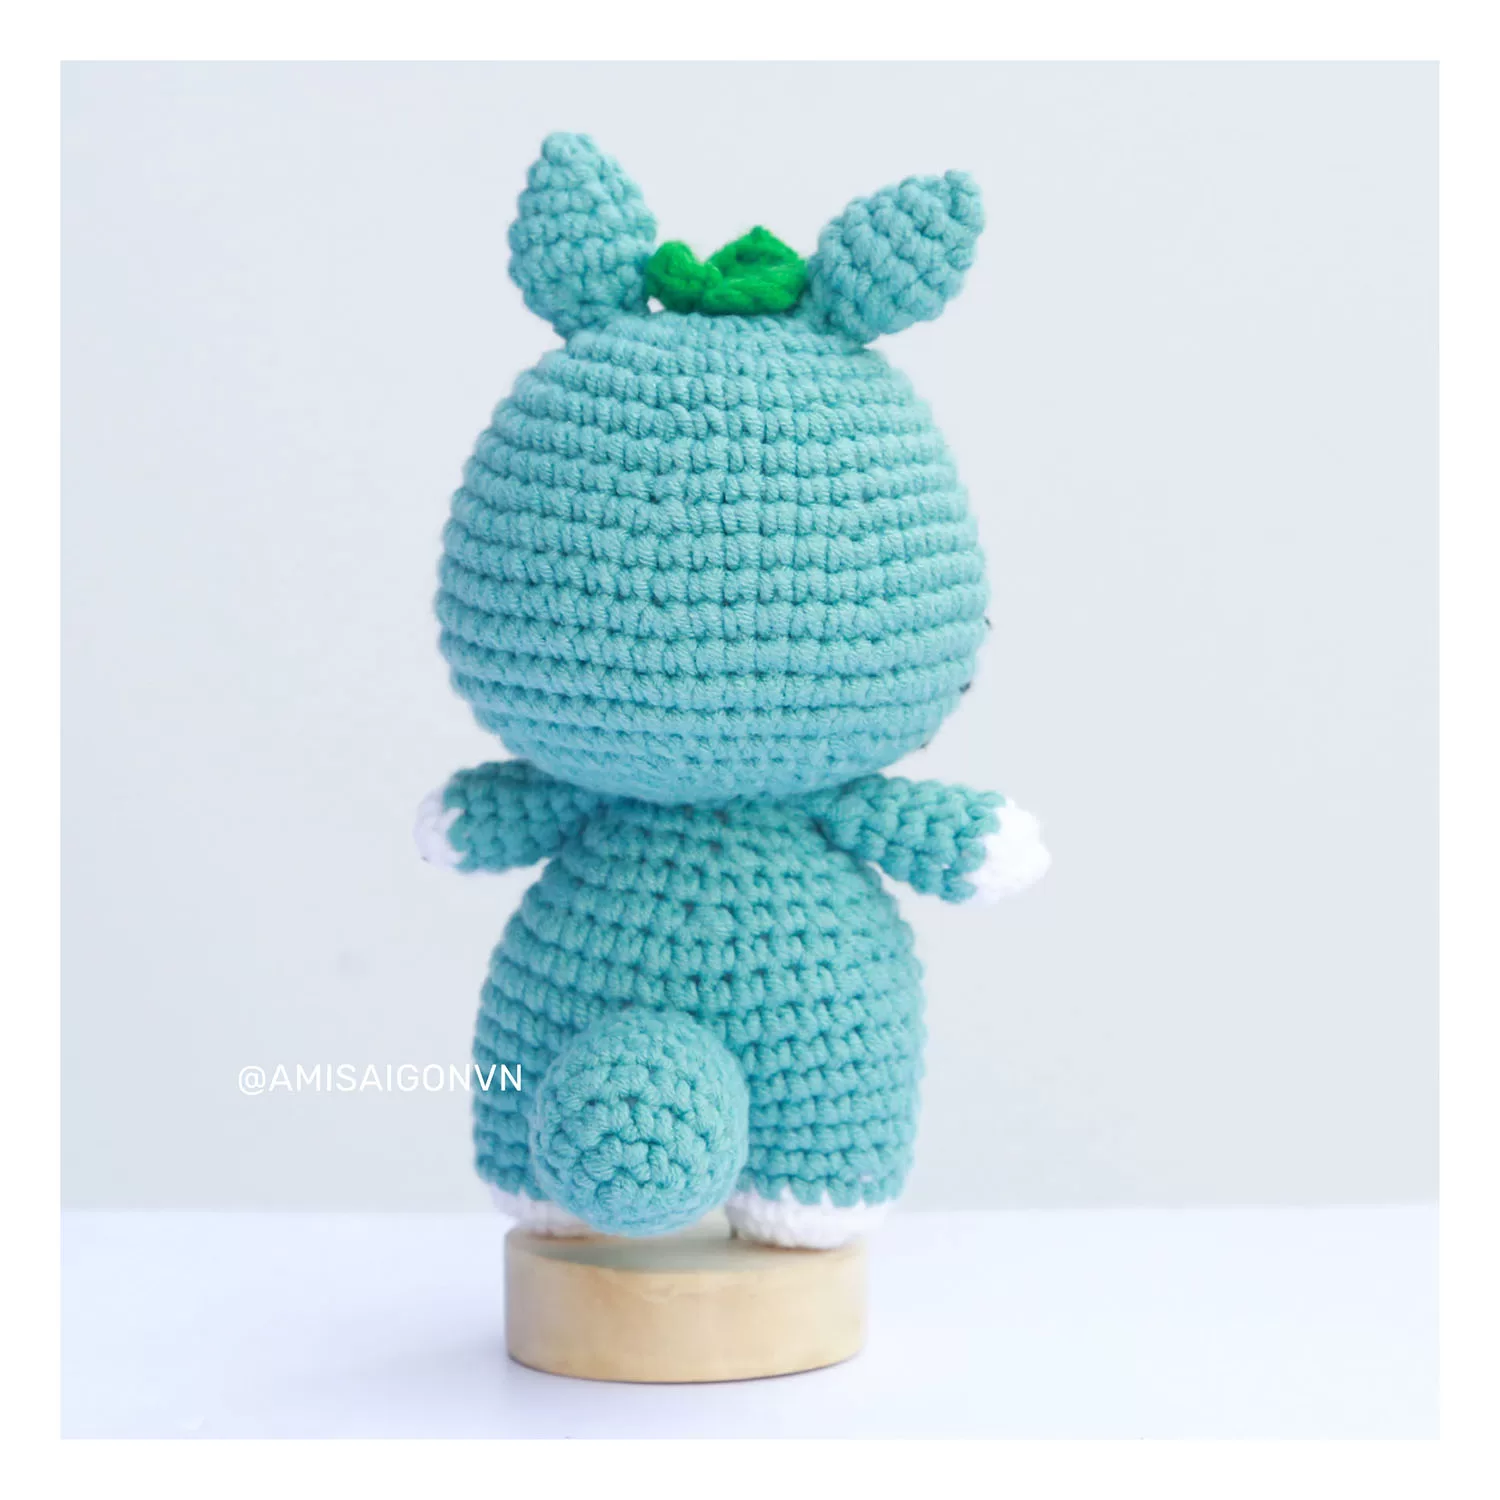 Totoroo Amigurumi | Crochet Pattern | Amigurumi Tutorial PDF in English | AmiSaigon